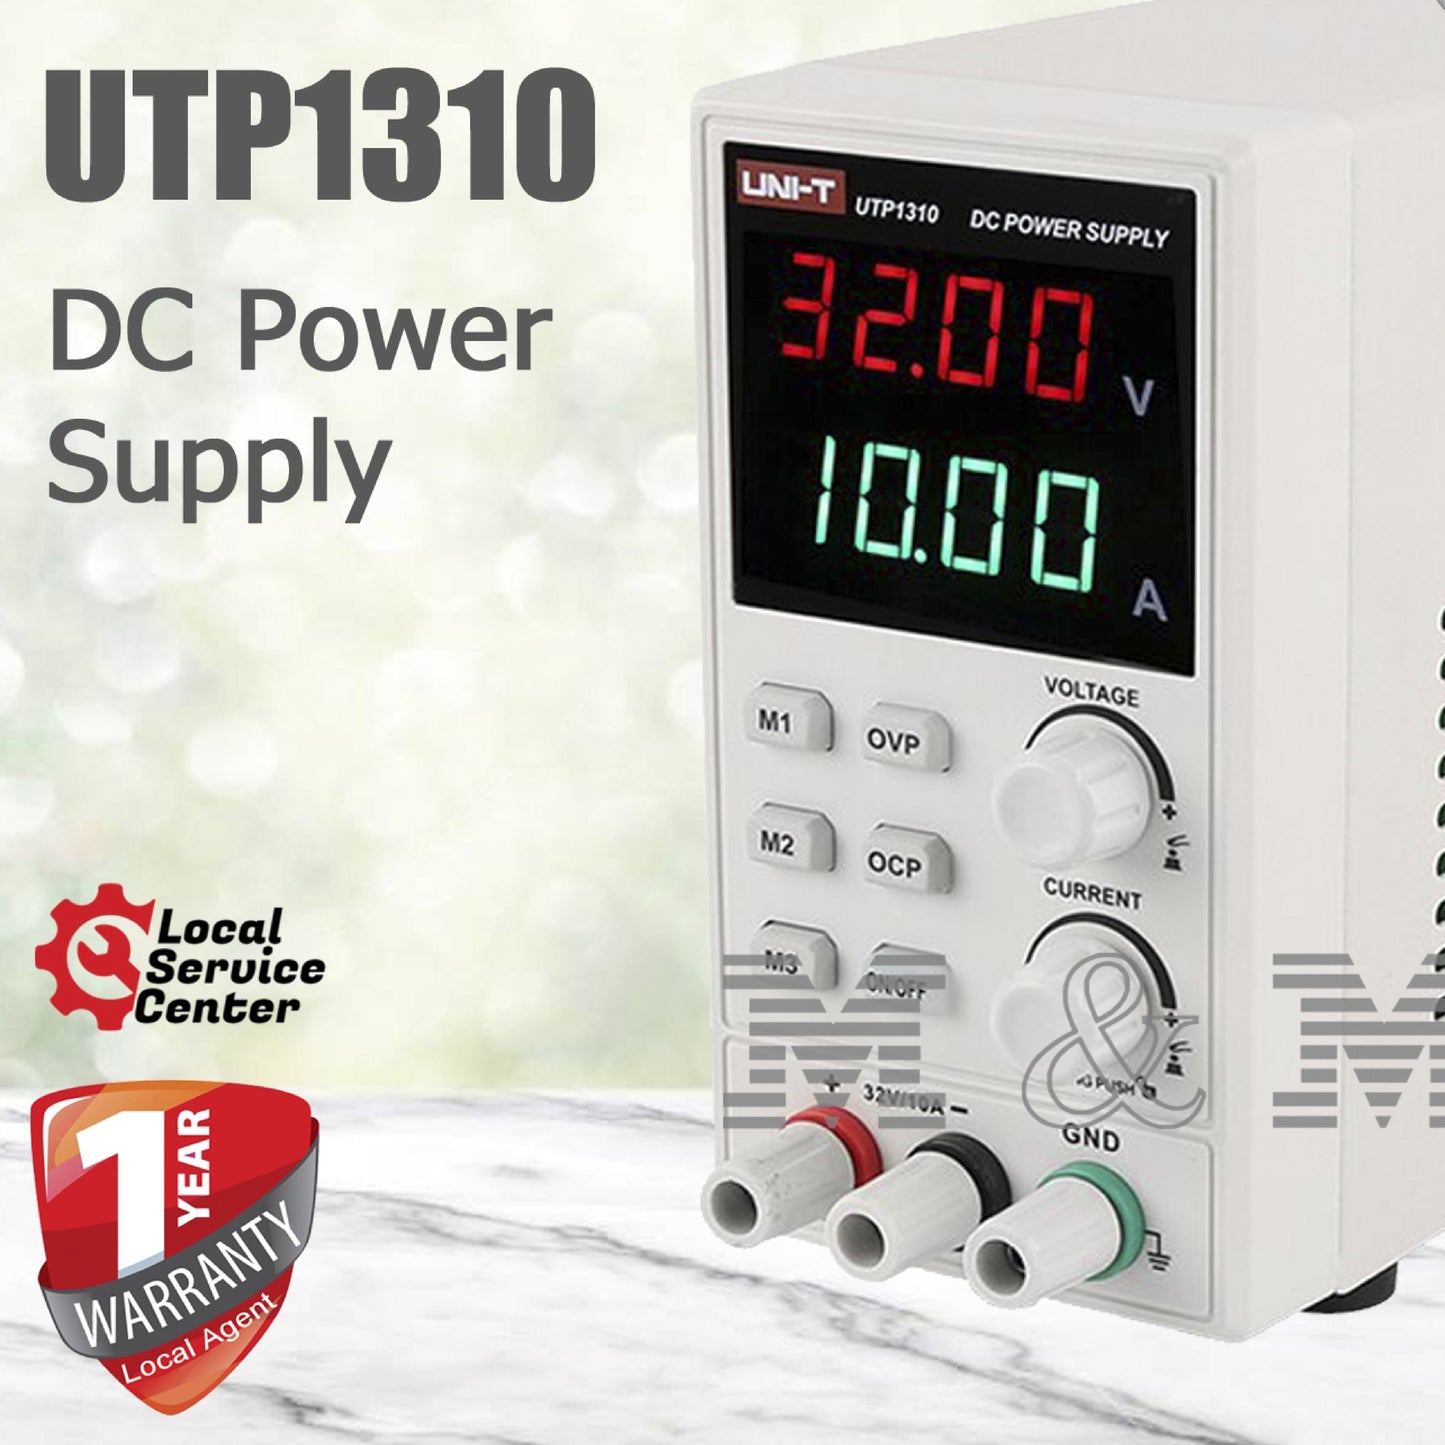 UNI-T UTP1310 DC POWER SUPPLY